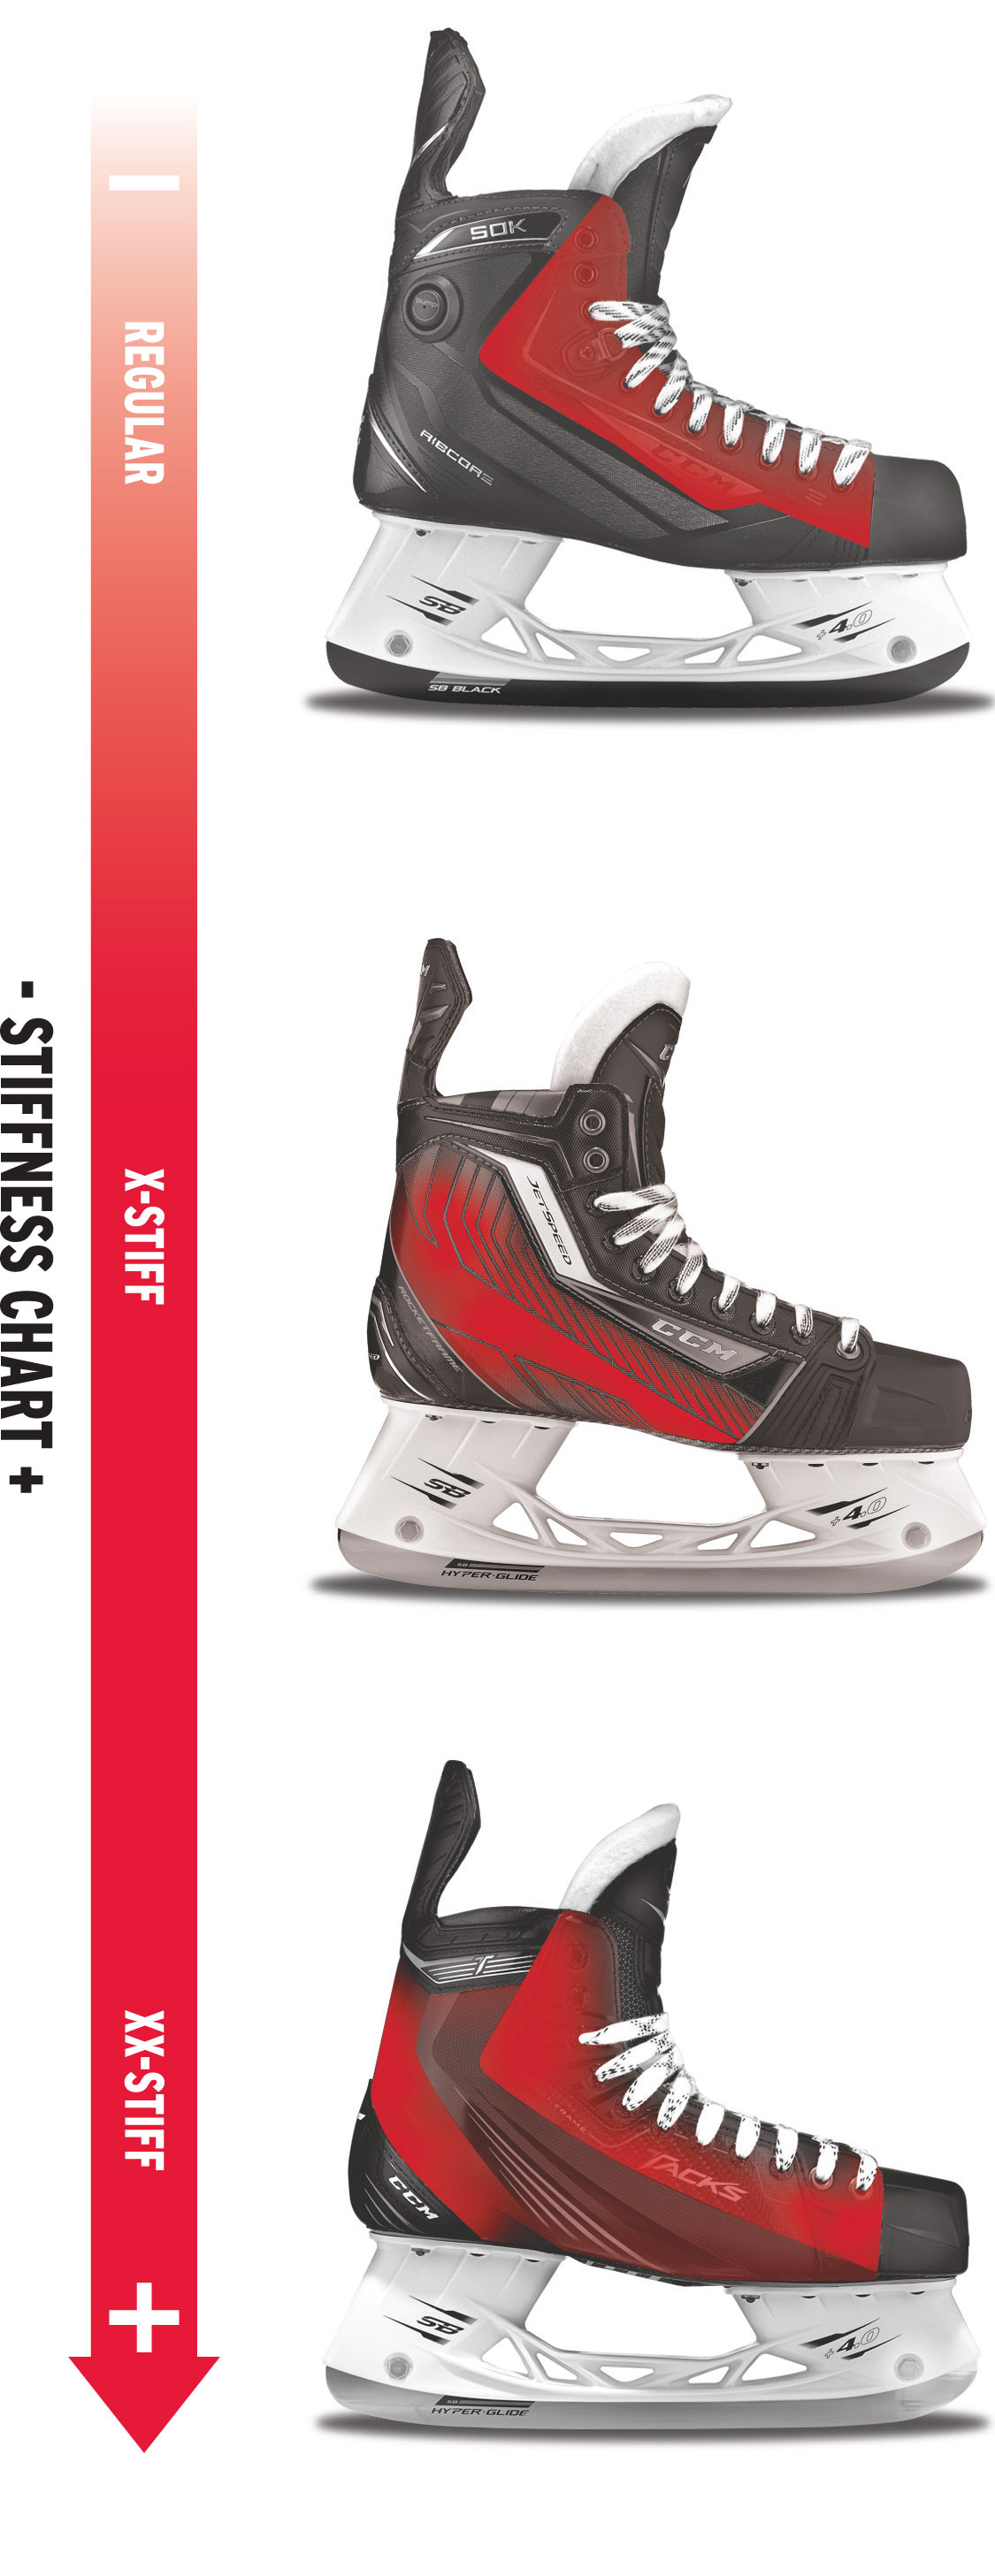 Hockey Skate Fit Chart